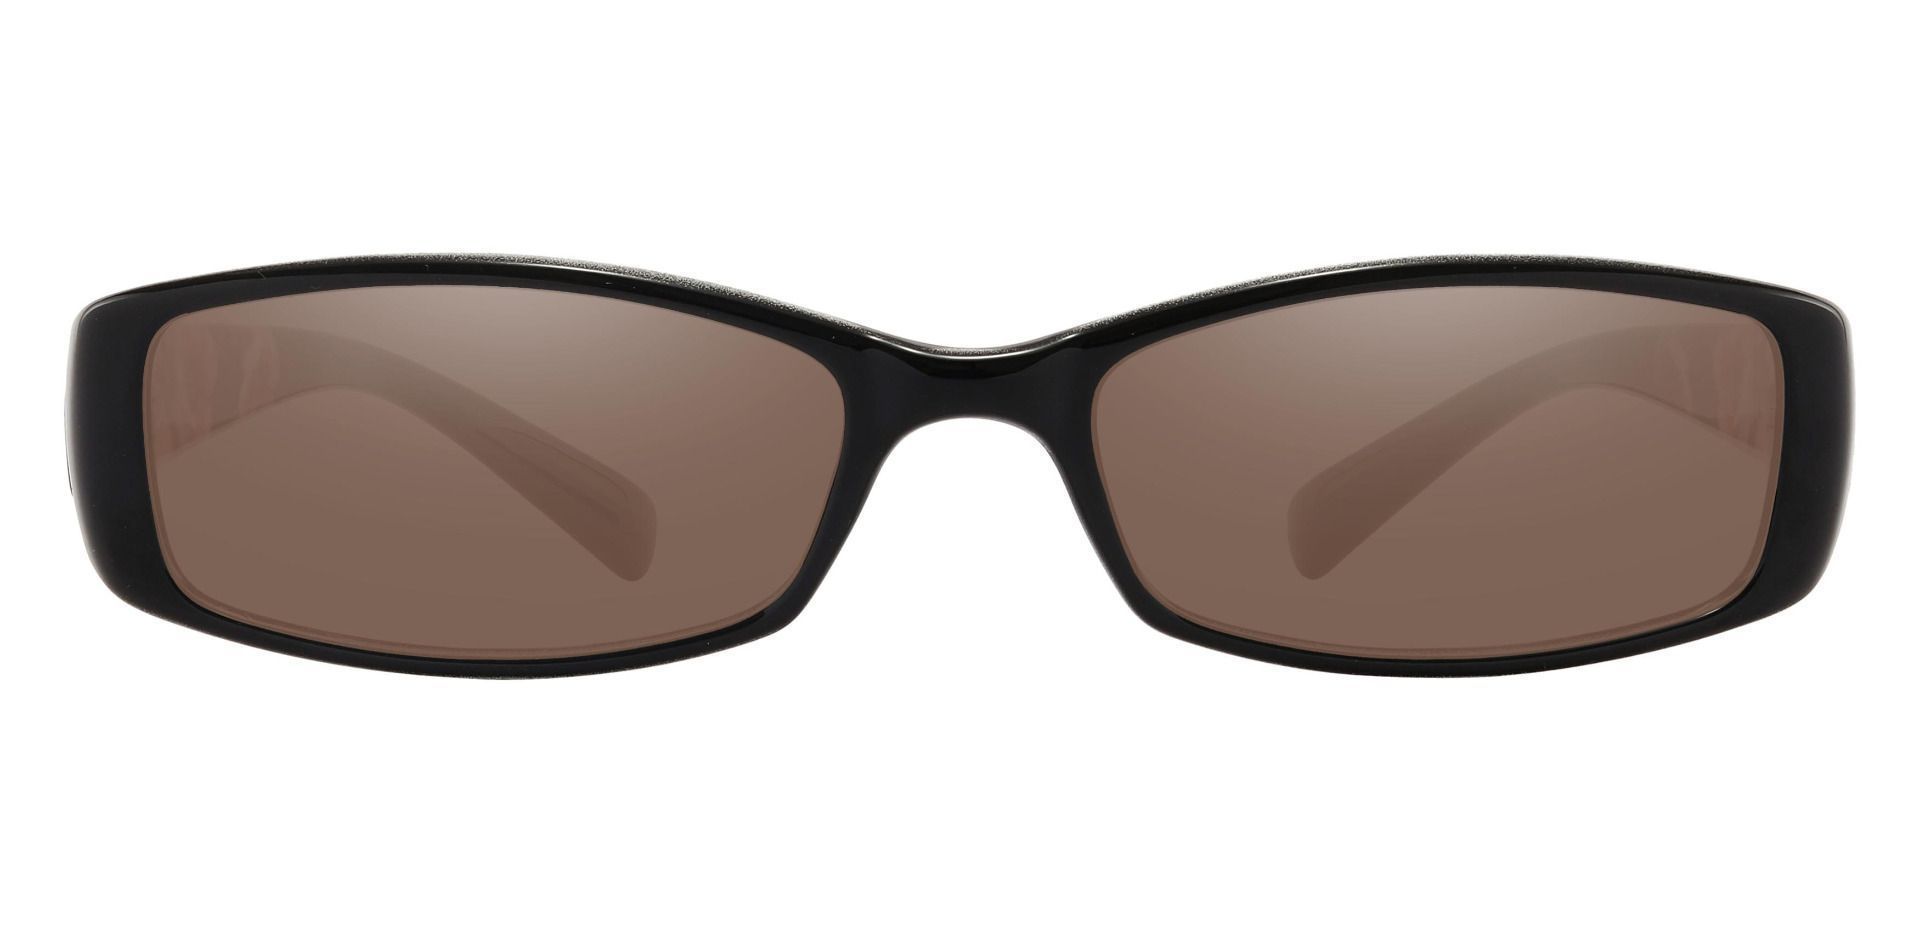 Medora Rectangle Non-Rx Sunglasses - Black Frame With Brown Lenses